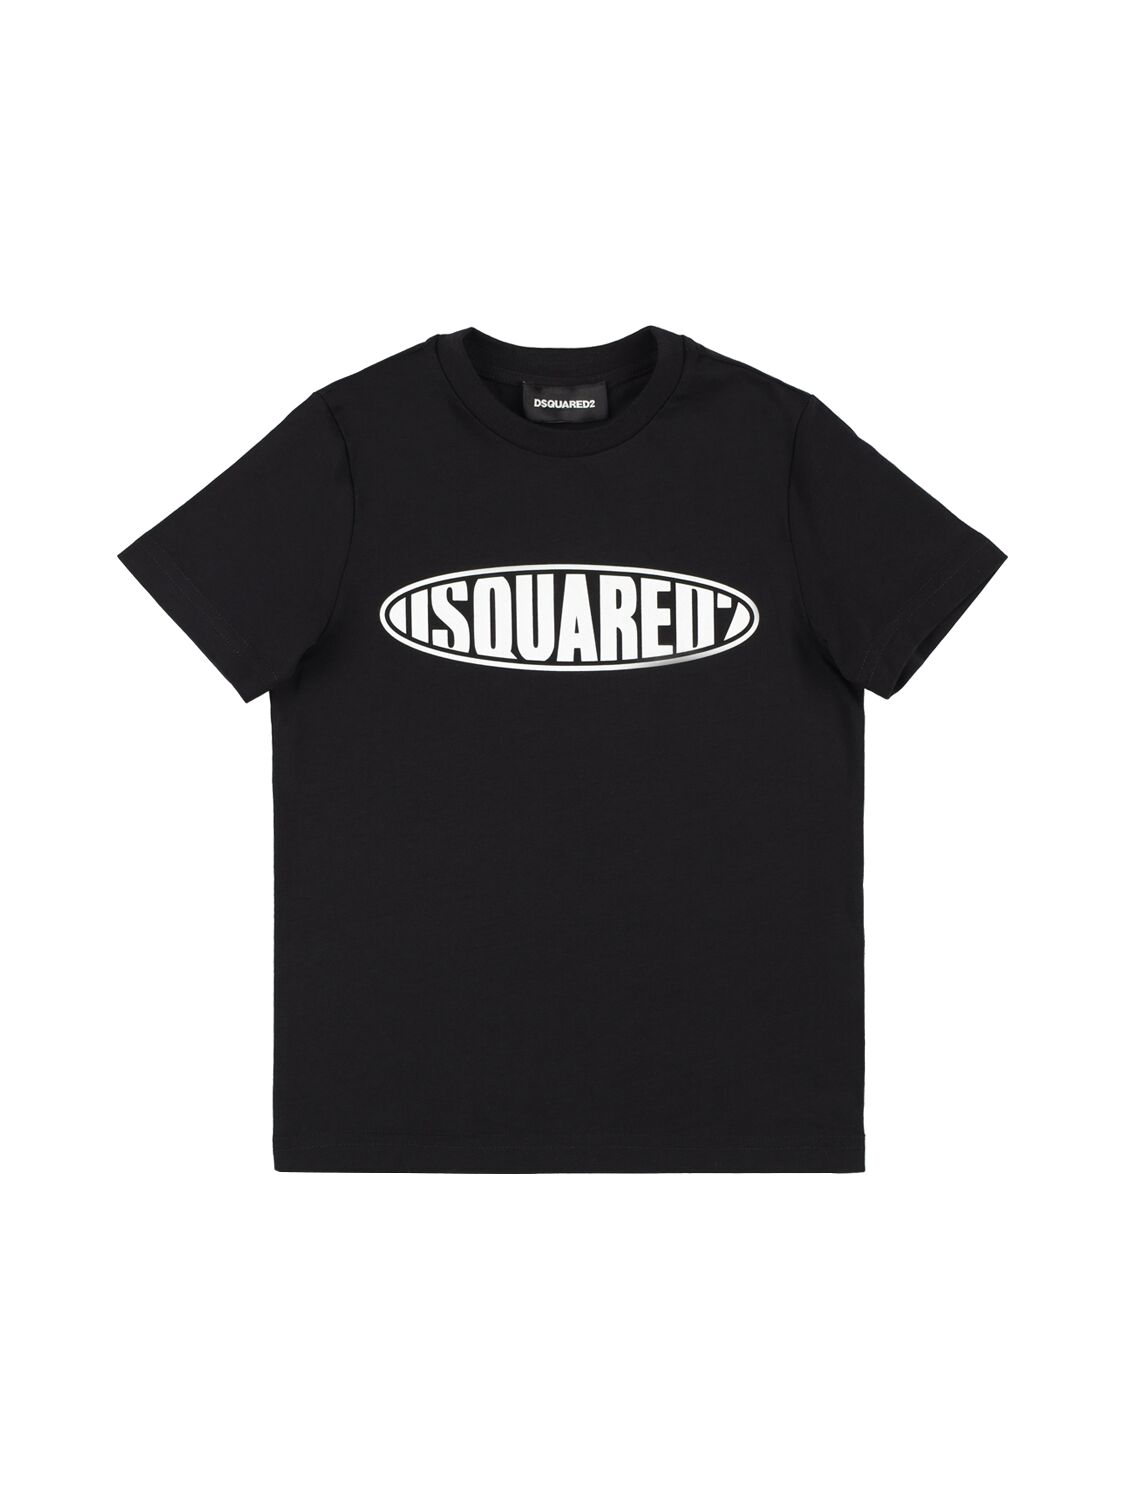 Dsquared2 Kids' Logo Print Cotton Jersey T-shirt In Black